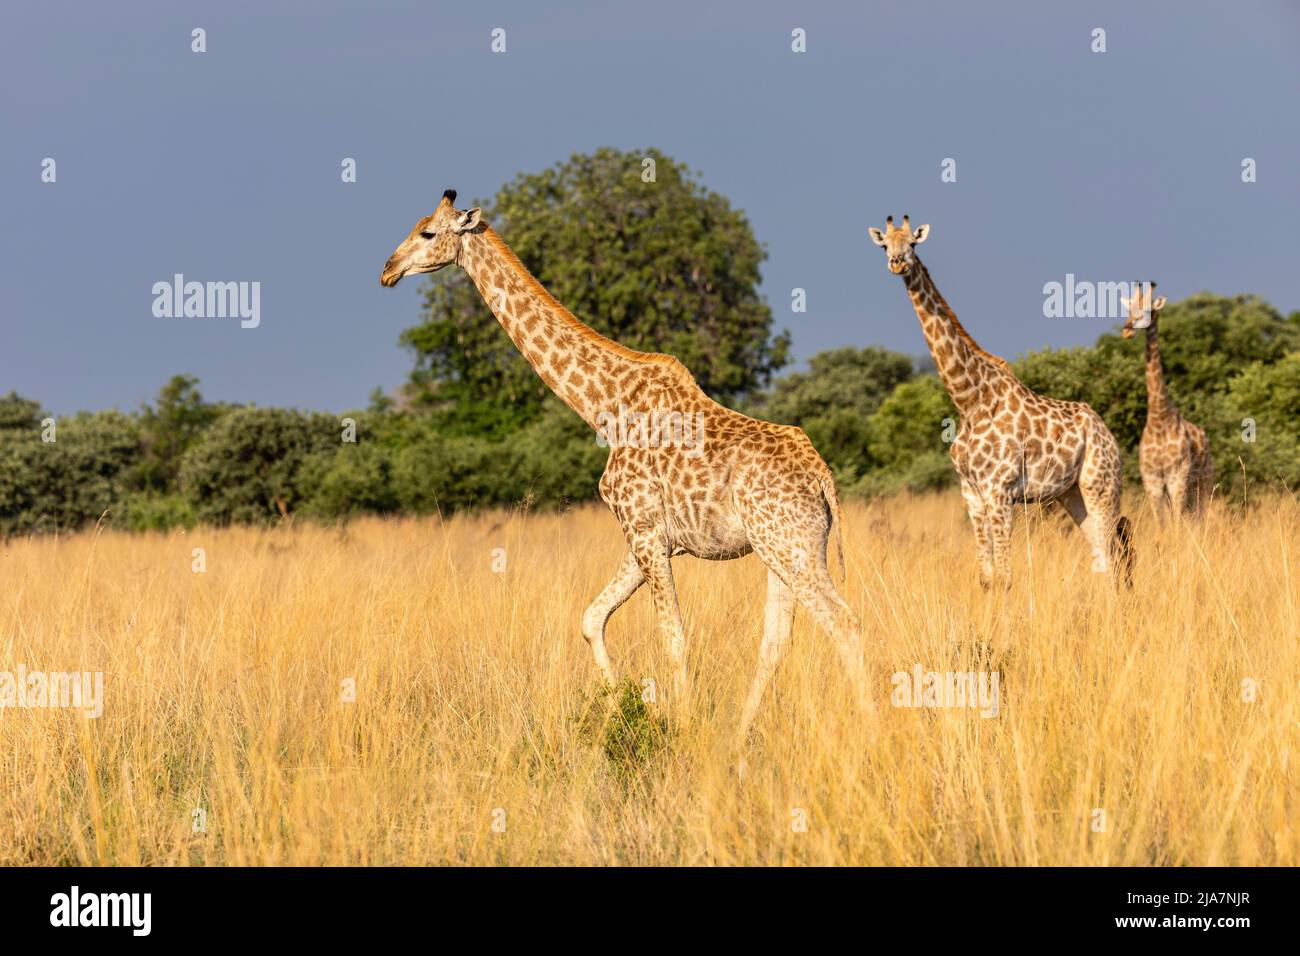 Girafe du sud de la prairie du delta de l'Okavango, Botswana Banque D'Images